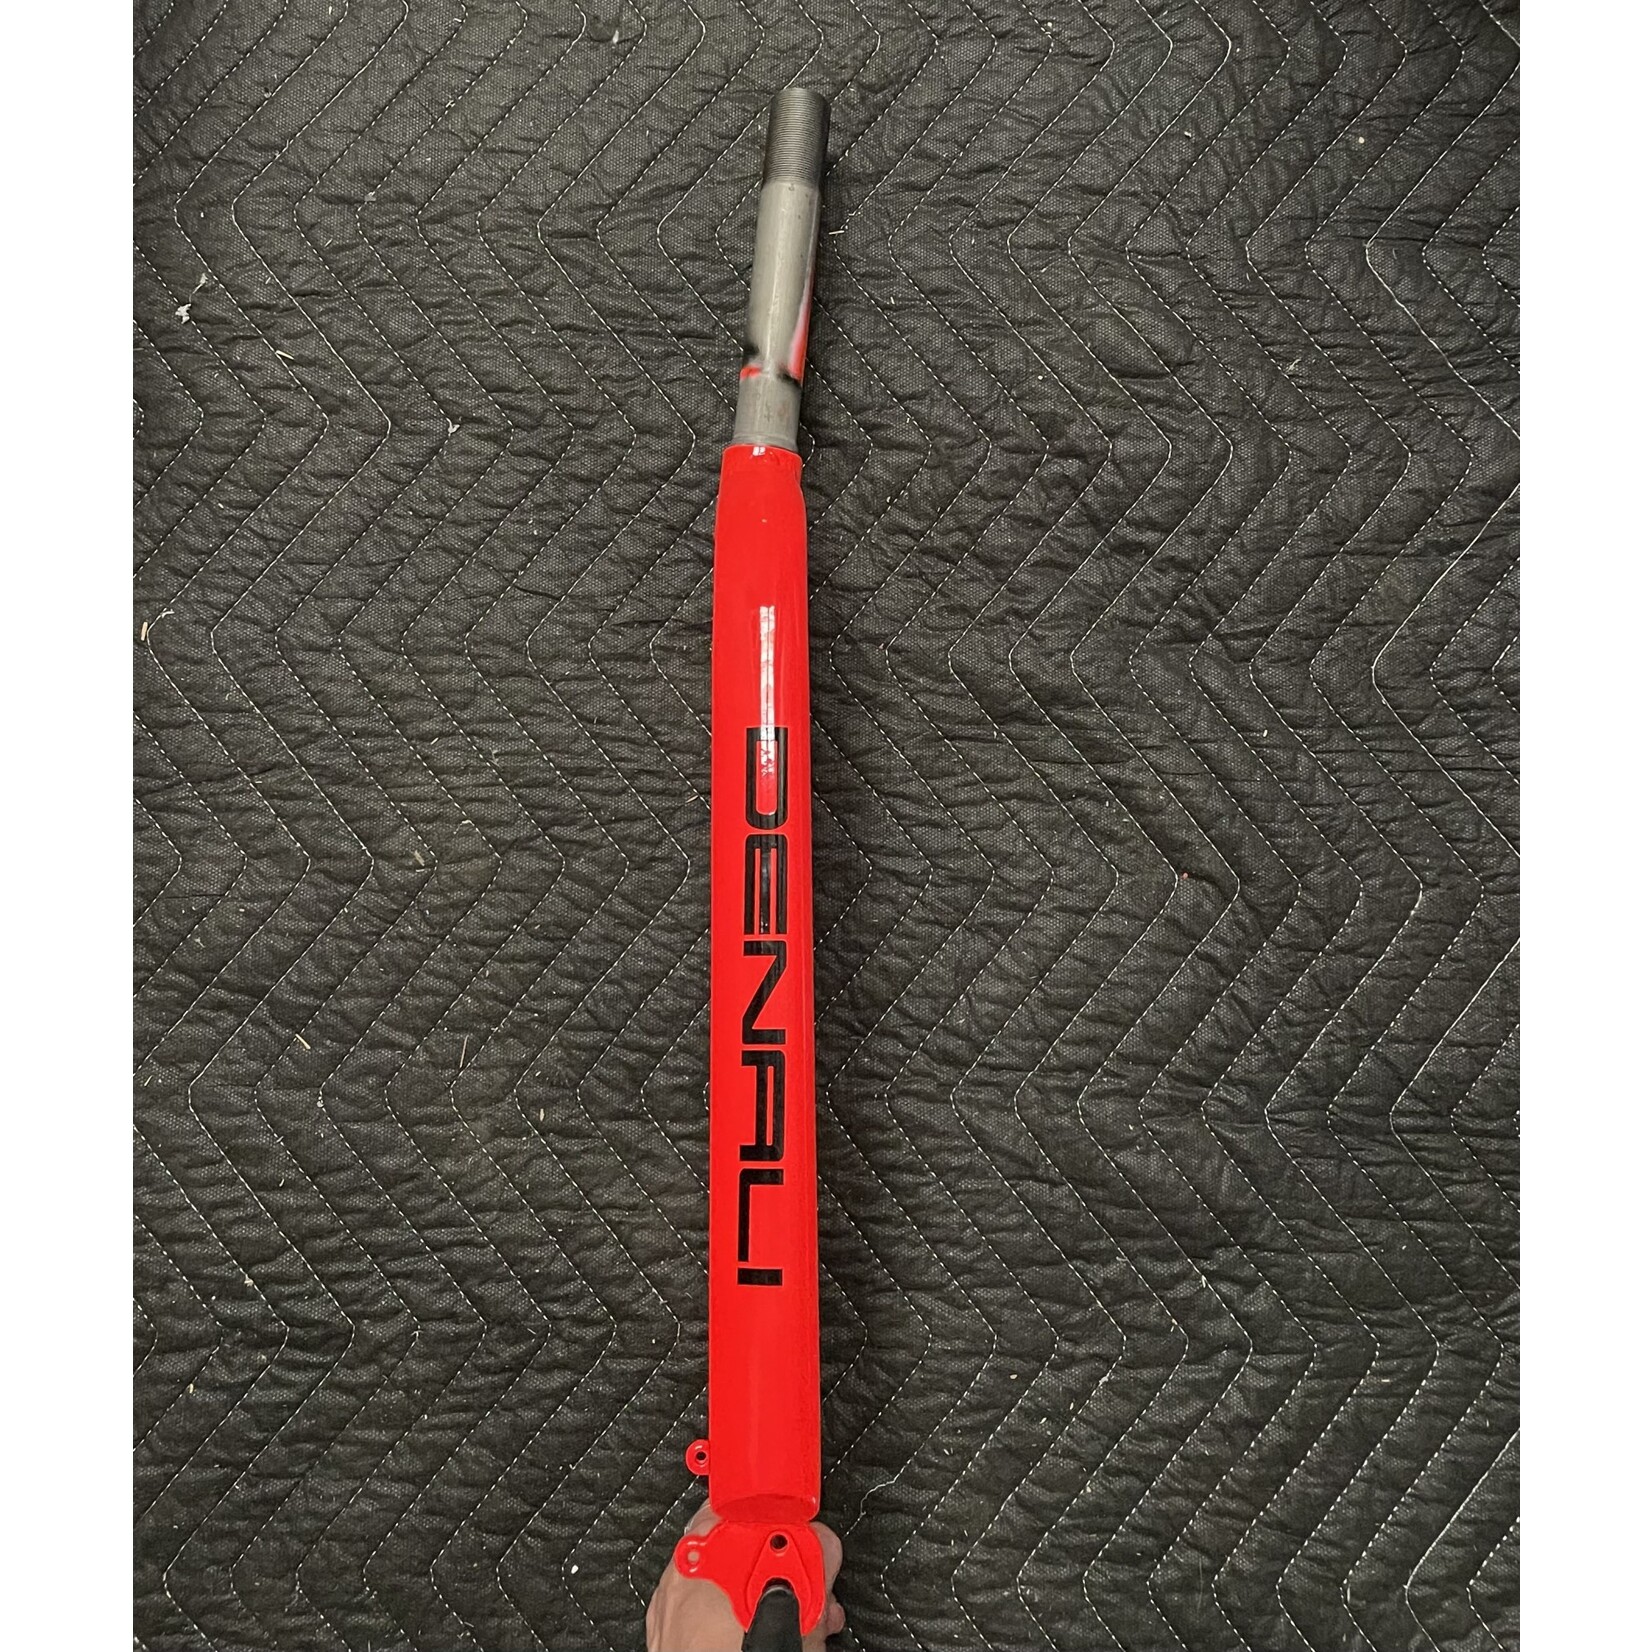 Denali 700 Threaded Hybrid Bicycle Fork (Orange) 5 3/4” Steer Tube